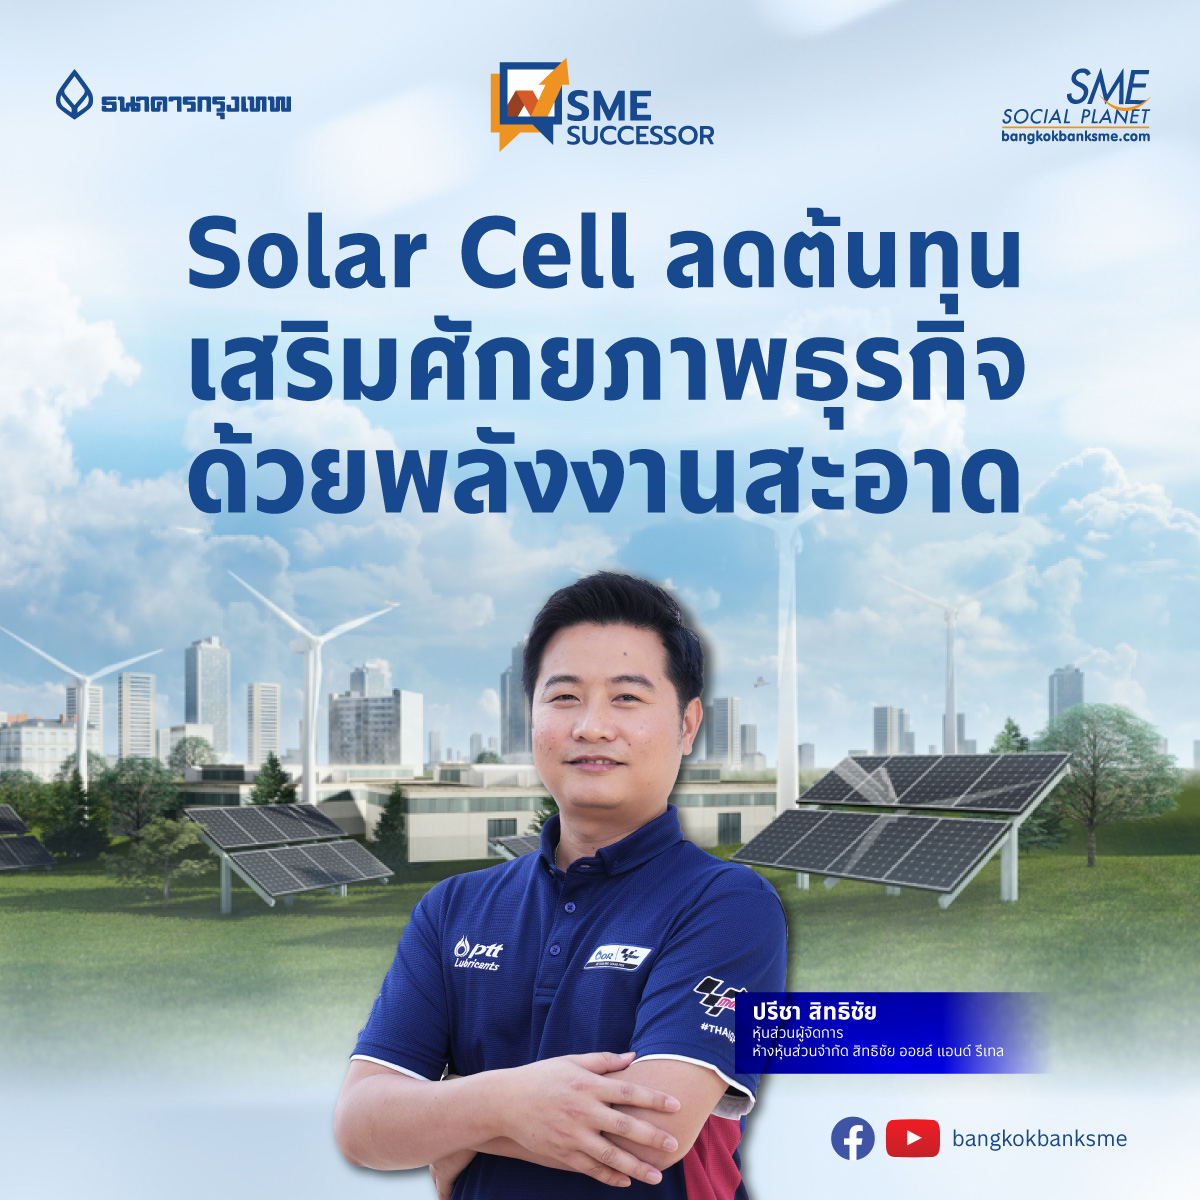 👑 SME Successor Ep:22 |Solar Cell ลดต้นทุน เสริมศักยภาพธุรกิจ ด้วยพลังงานสะอาด 
🔘 ติดตามรายละเอียดเพิ่มเติม : 

#BangkokBankSME | สาระดีๆ เพื่อ SMEs
Youtube : youtu.be/T-0ooOP2pZE
Facebook : fb.watch/qt96CVHllr/
Website : bangkokbanksme.com/en/sme-solarce…
#solarcell #สิทธิชัยออยล์